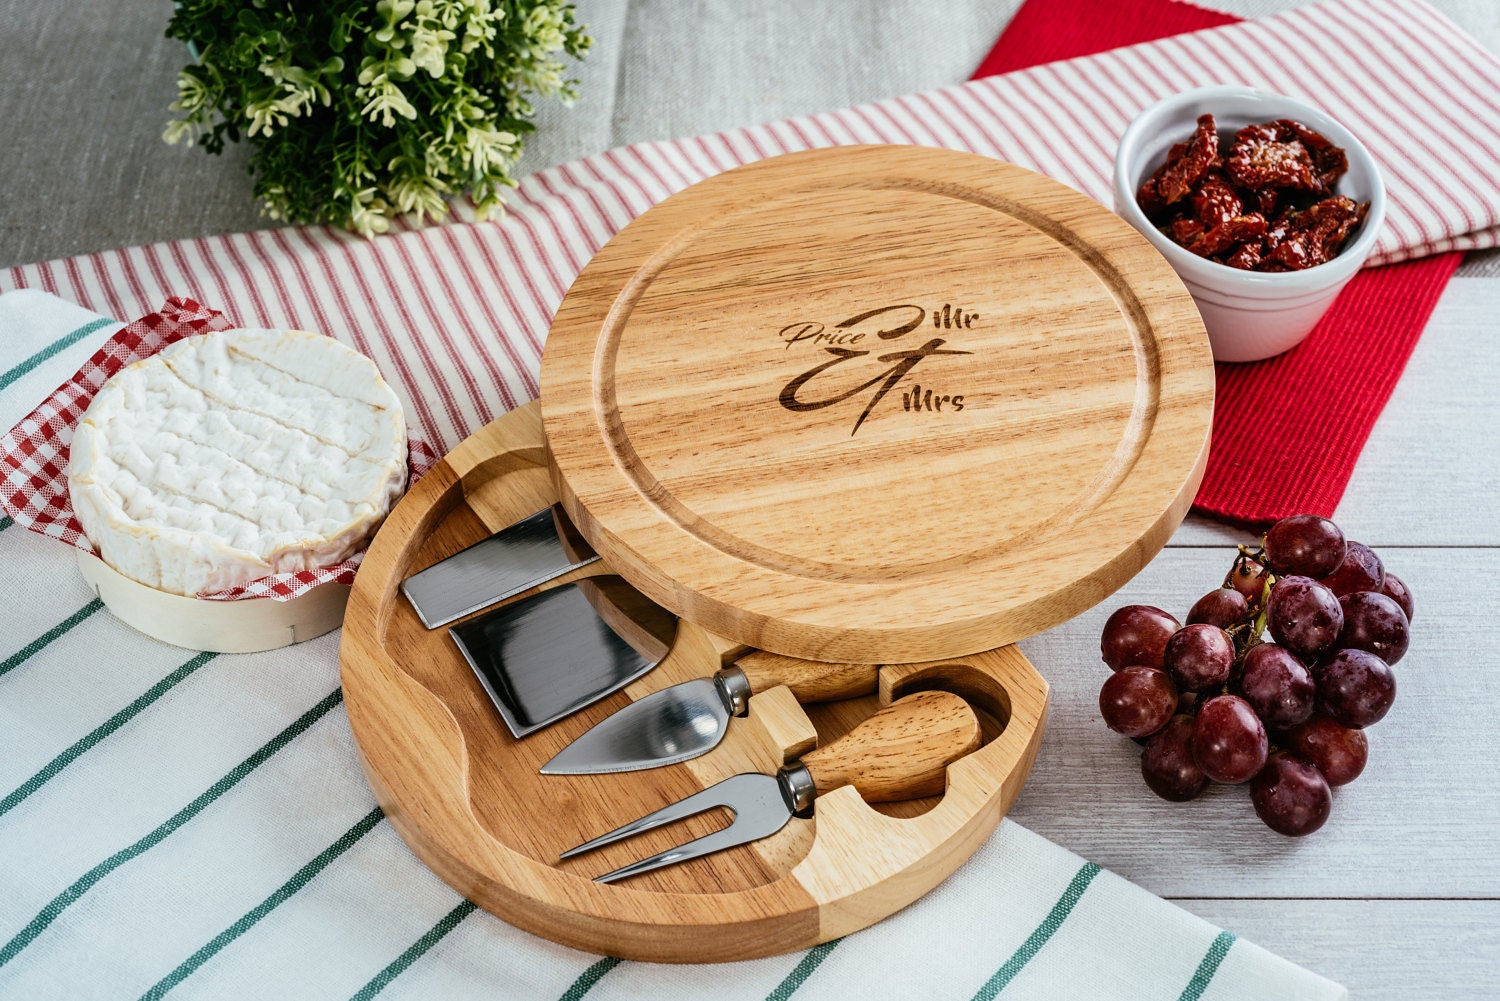 Personalised round wooden cheese board set - Split monogram Initial